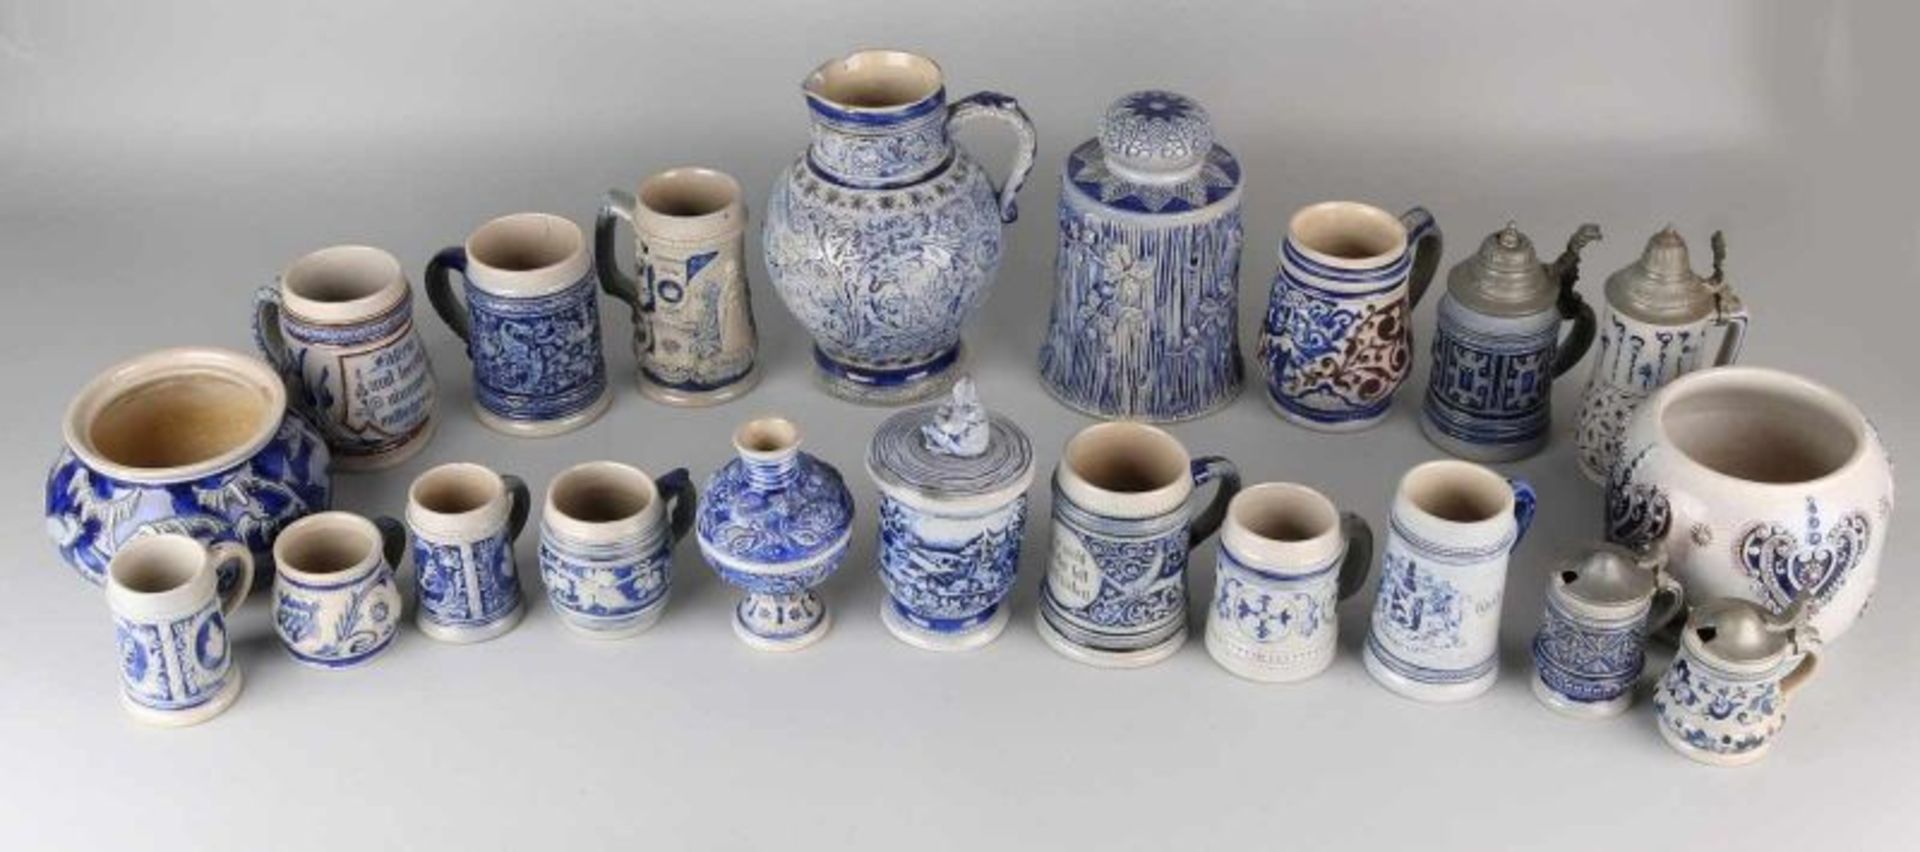 Twenty German antique pieces. Divers stoneware, ceramics, gray / blue glaze. Some damage possible.